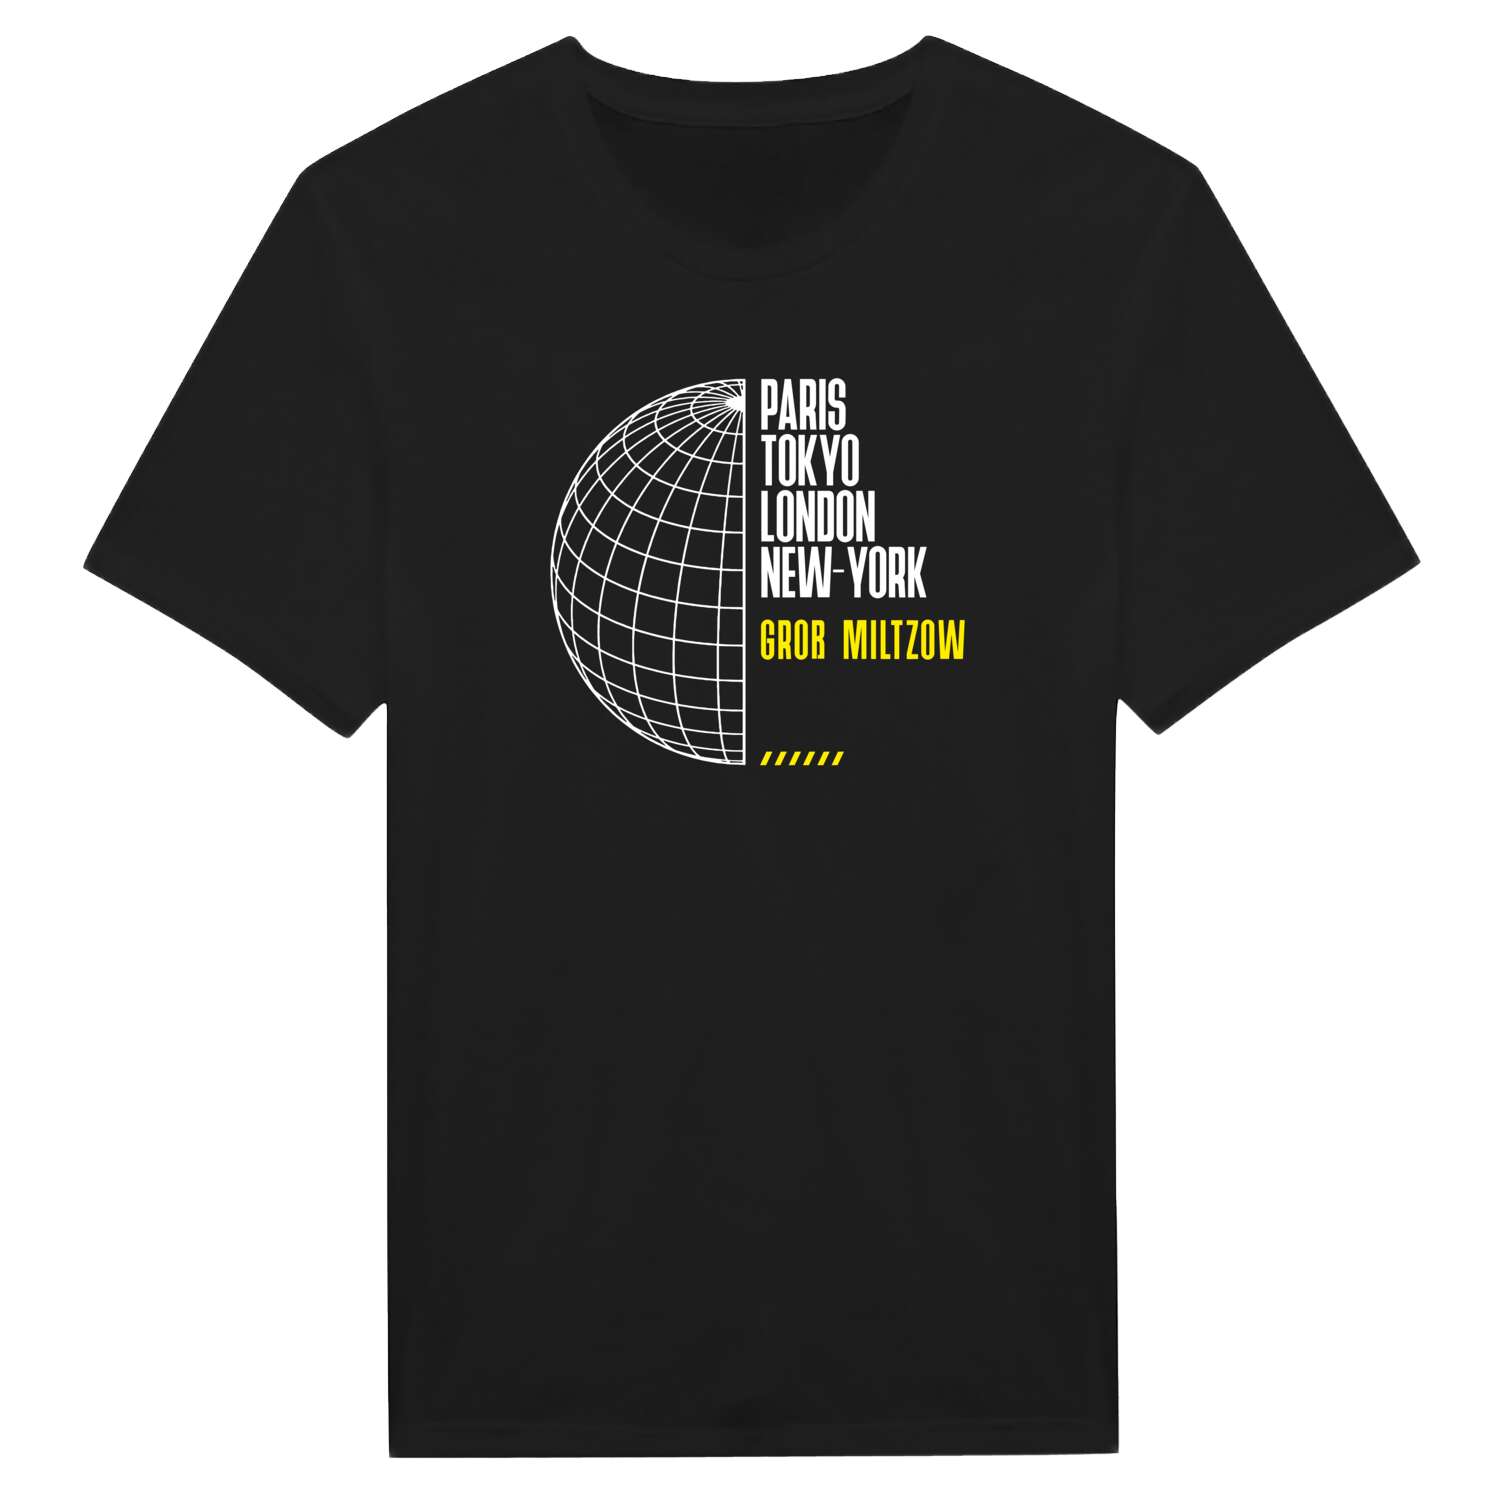 Groß Miltzow T-Shirt »Paris Tokyo London«